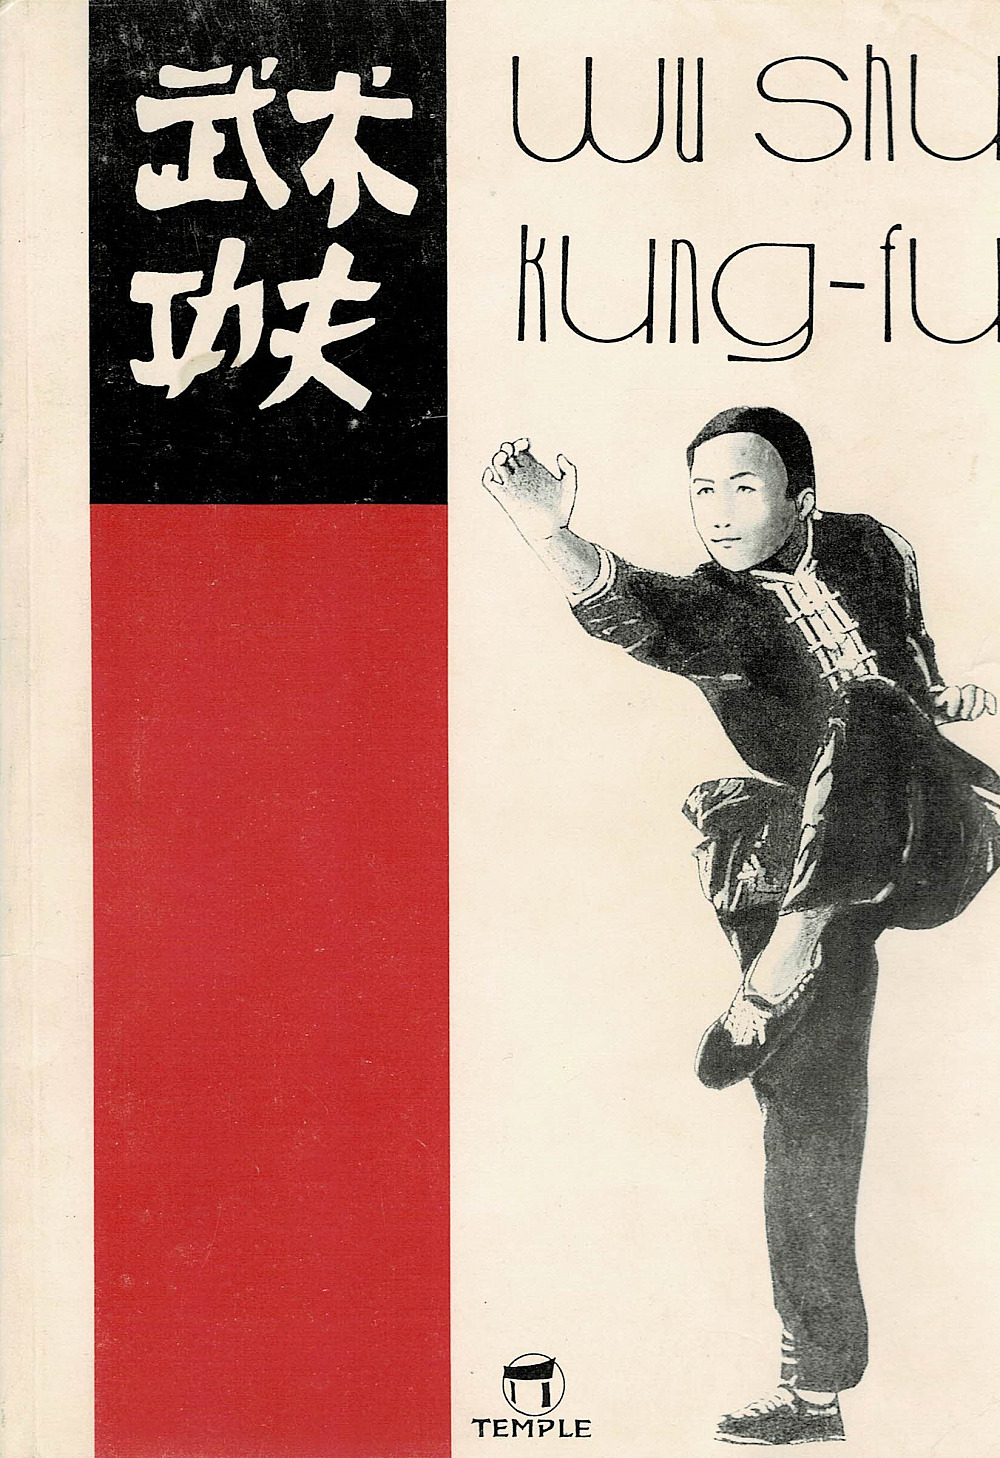 Wu Shu Kung-Fu